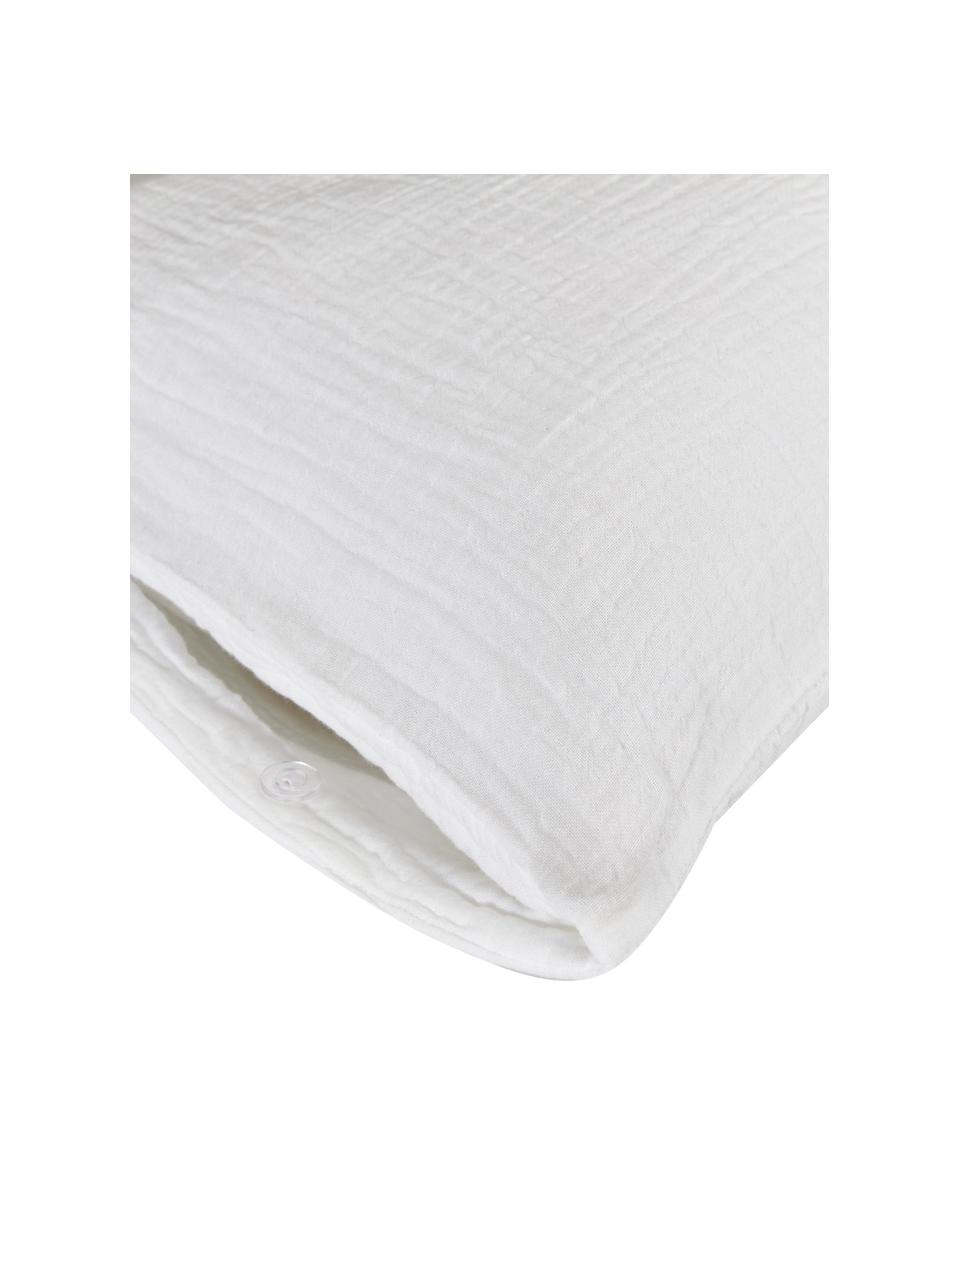 Mousseline kussenslopen Odile van katoen in wit, 2 stuks, Wit, B 60 x L 70 cm (2 stuks)